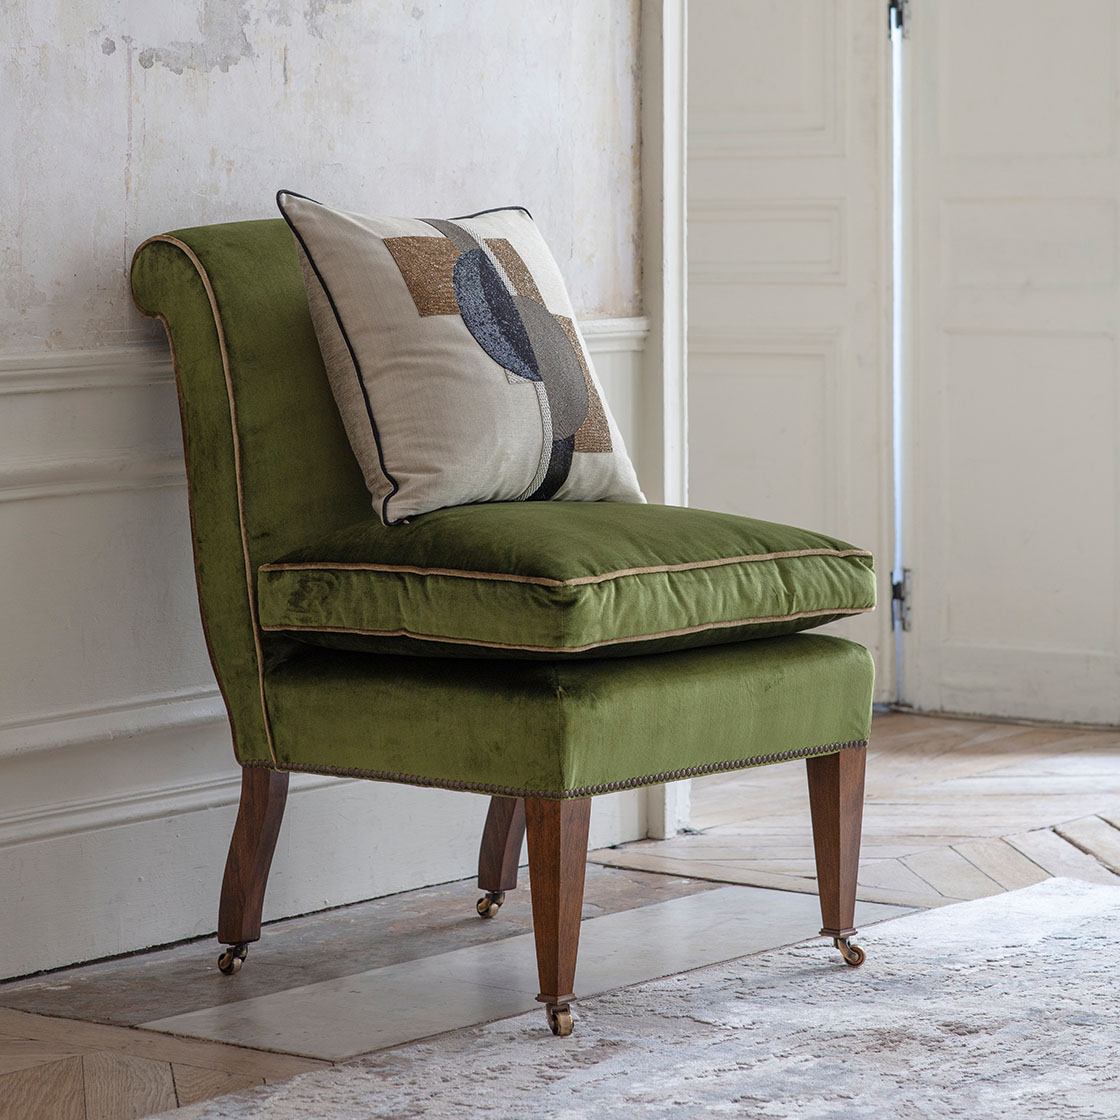 Lydia chair in Capri silk velvet - Georgian green with Elektra panel and Tamburlaine cushion - Beaumont & Fletcher